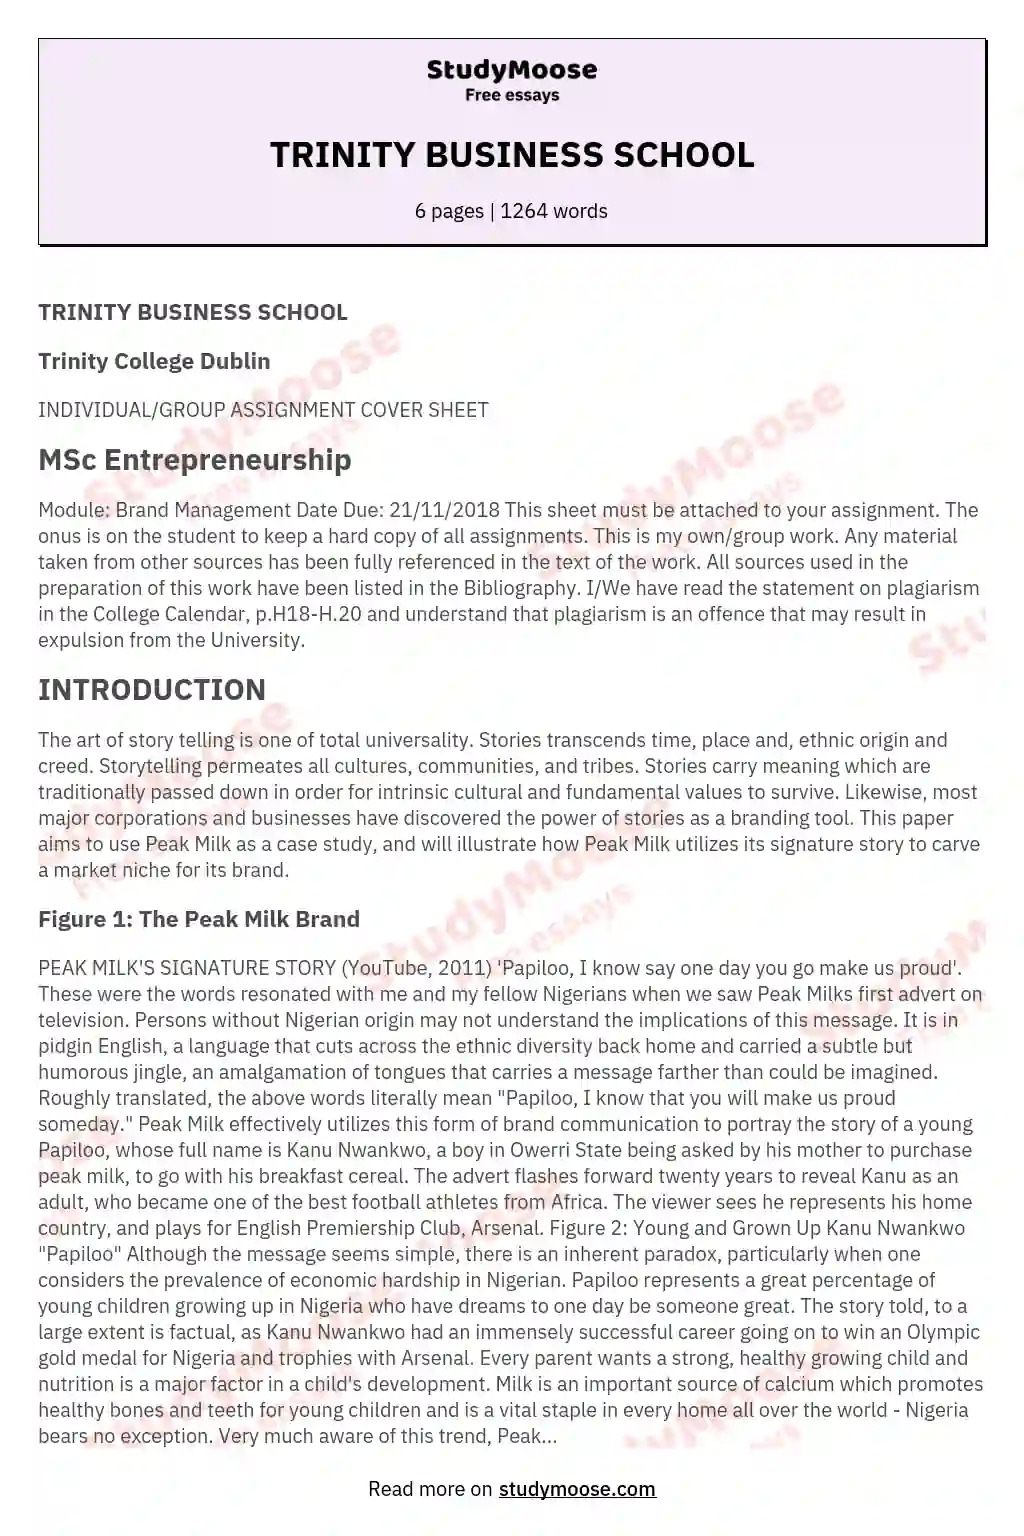 TRINITY BUSINESS SCHOOL essay